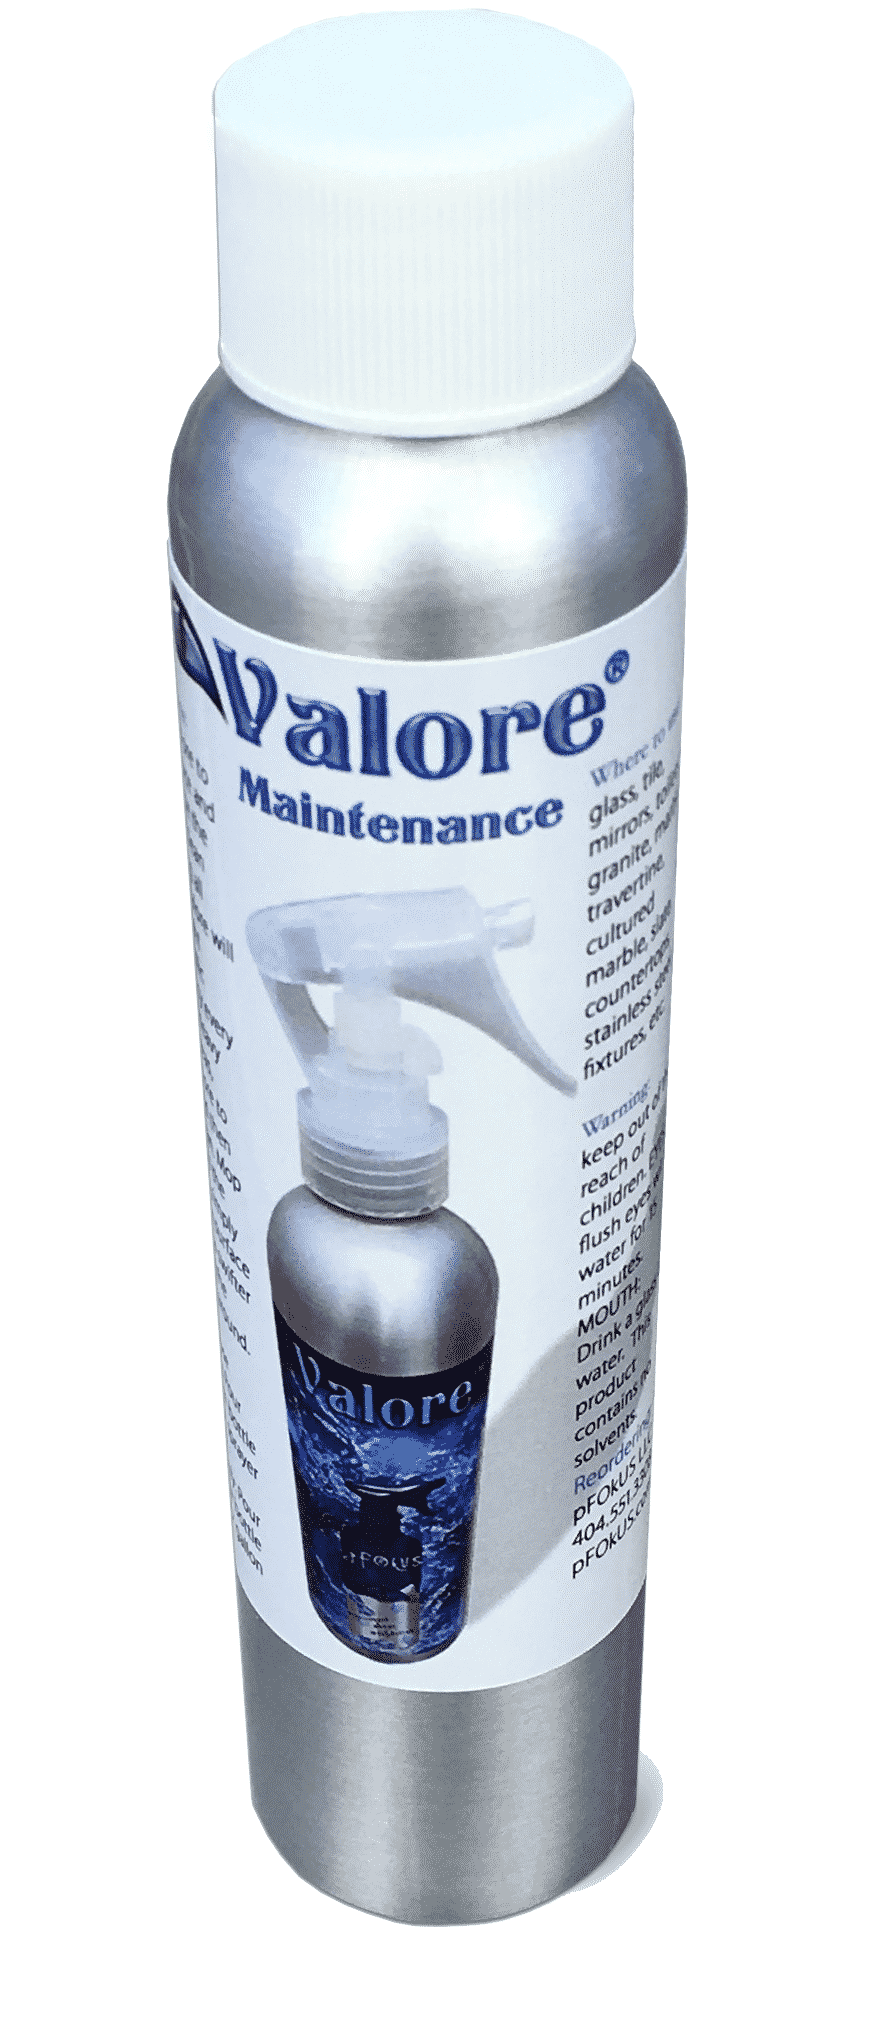 Shower Glass Cleaner and Sealer -Valore Maintenance pFOkUS